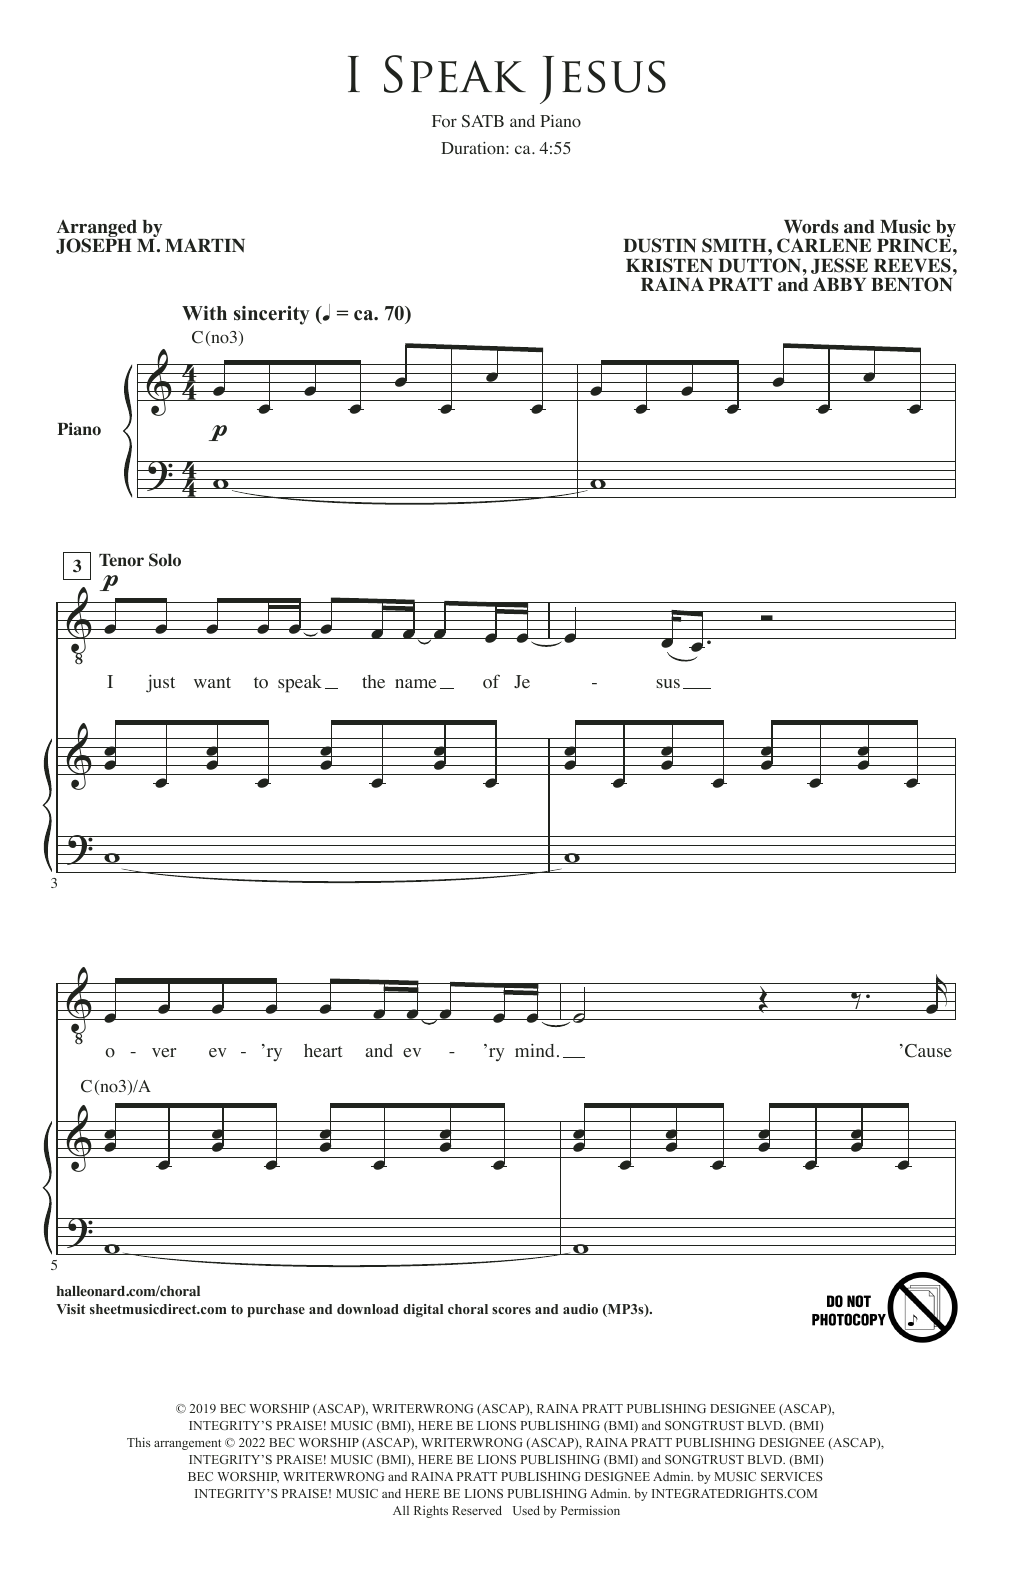 KingsPorch I Speak Jesus (arr. Joseph M. Martin) Sheet Music Notes & Chords for SATB Choir - Download or Print PDF